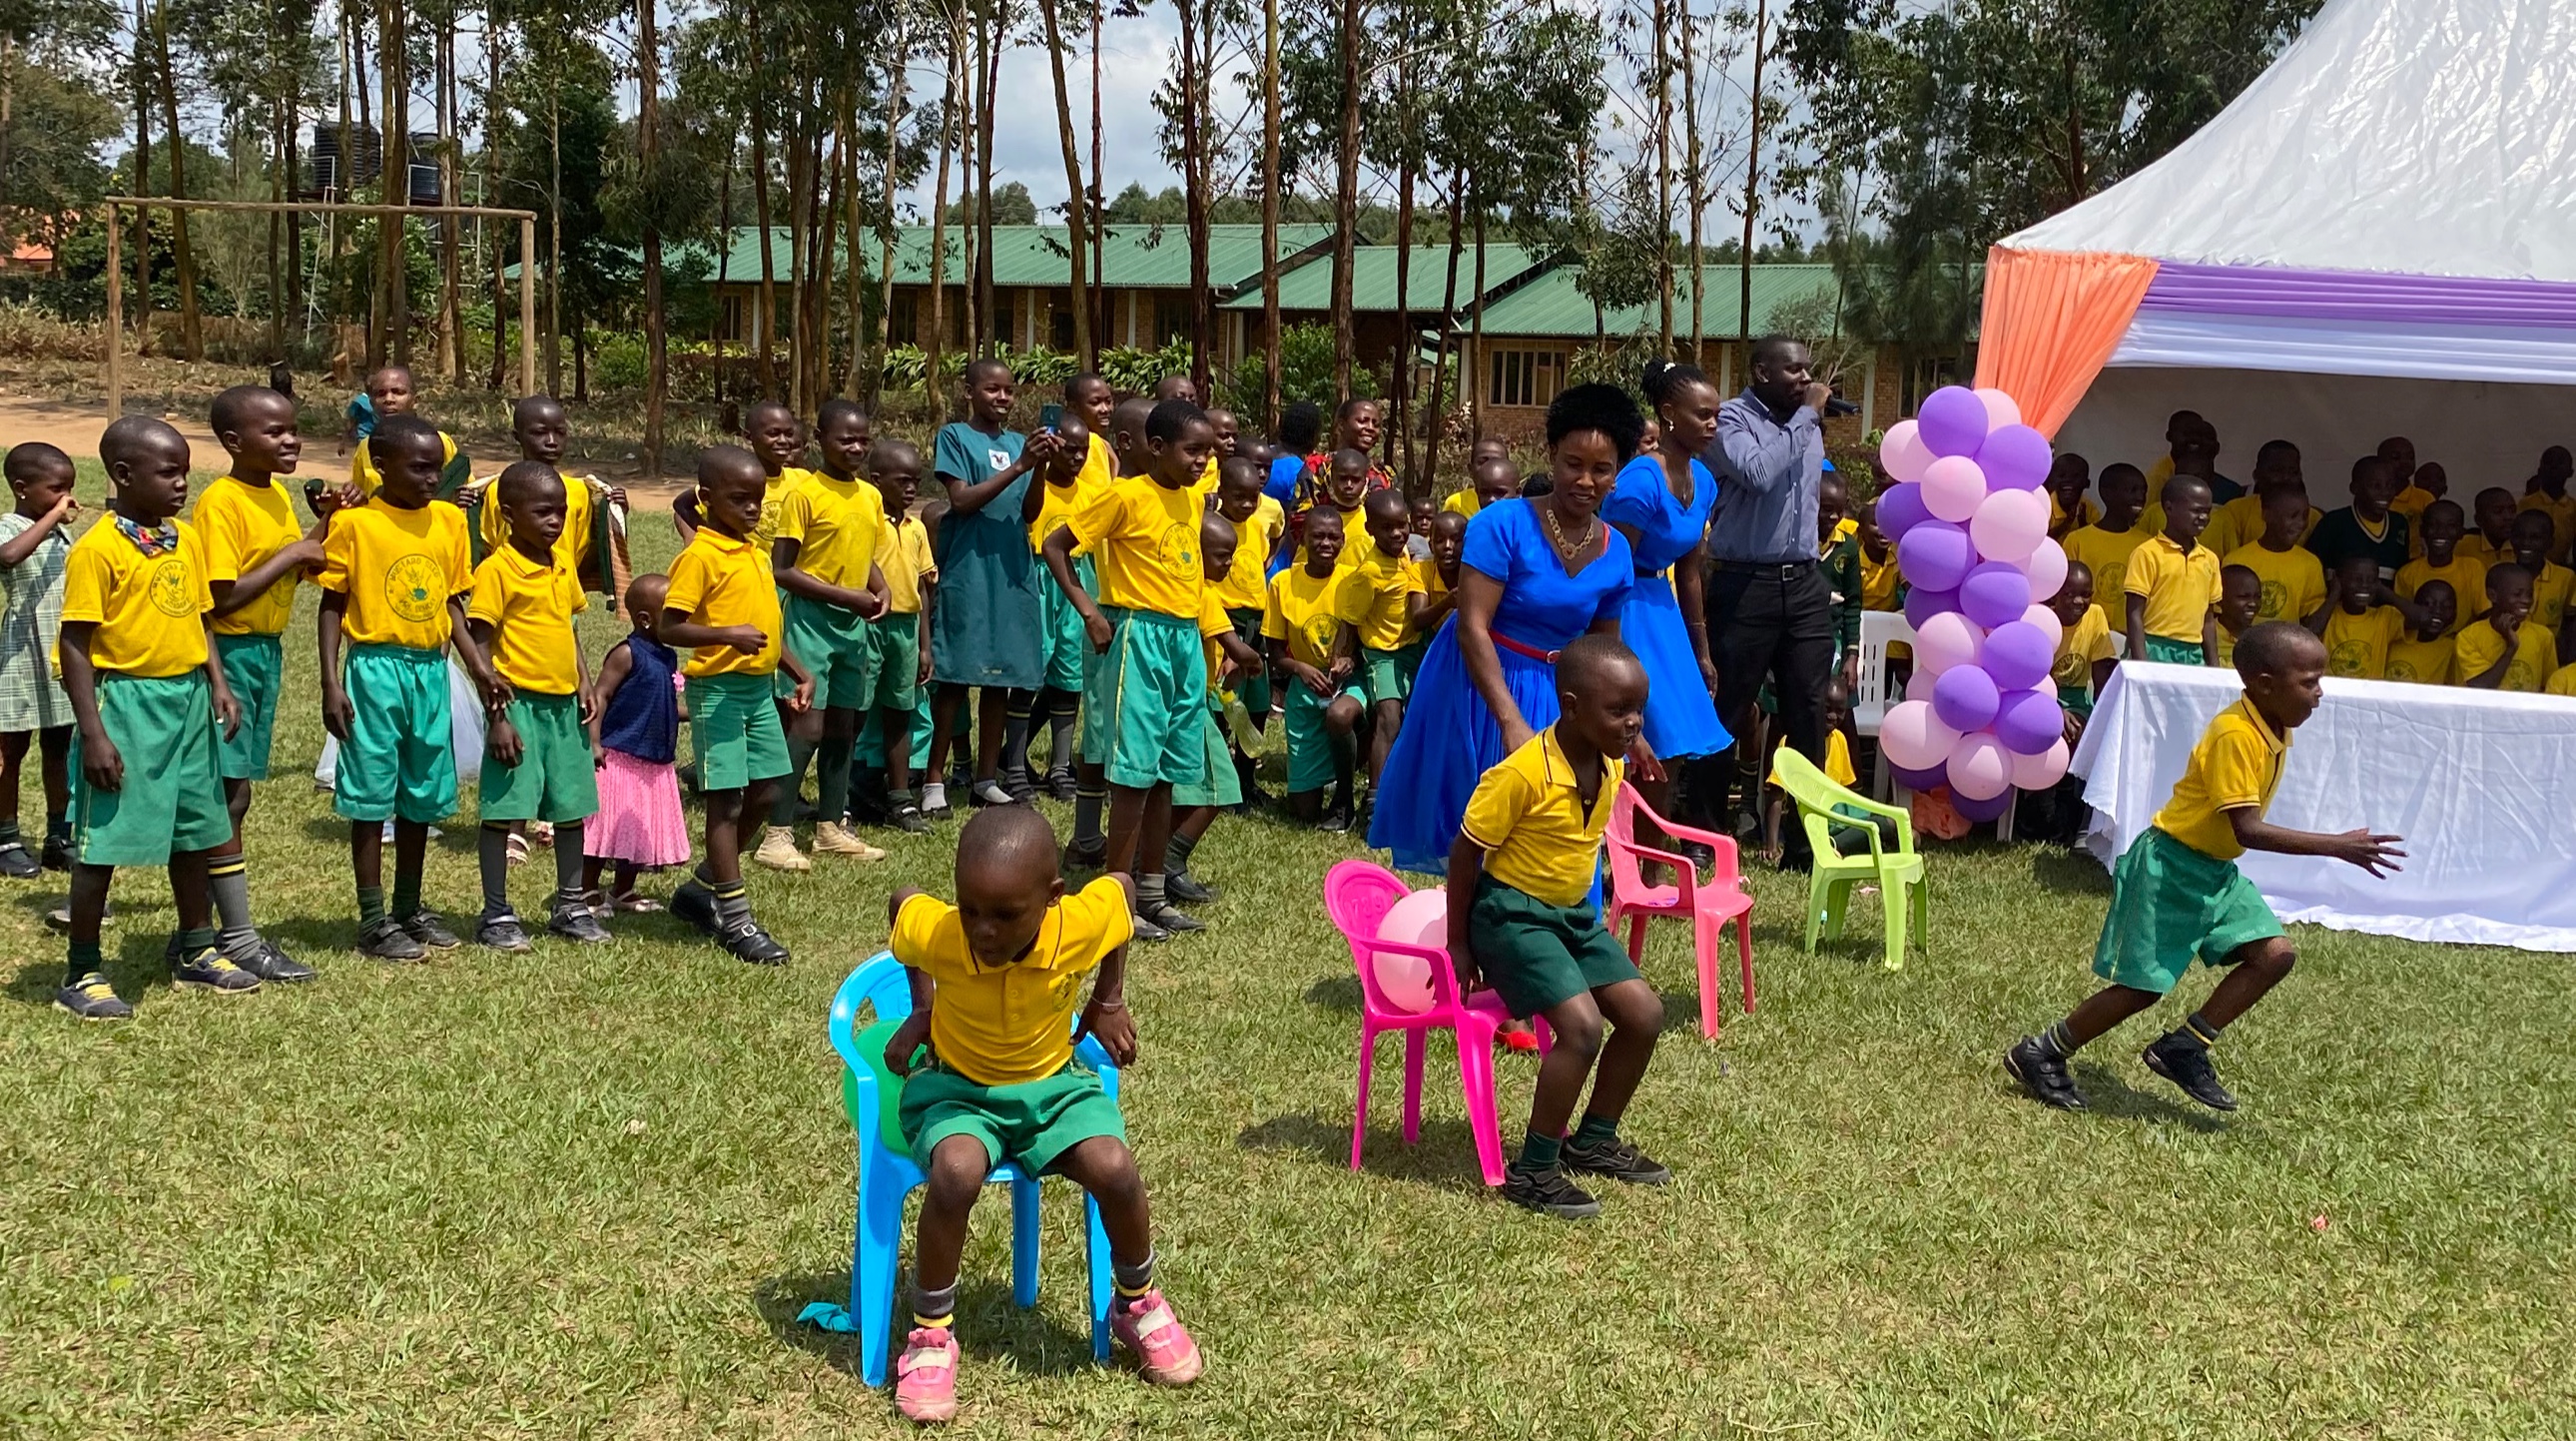 Primary School students dancing a traditional Buganda dance